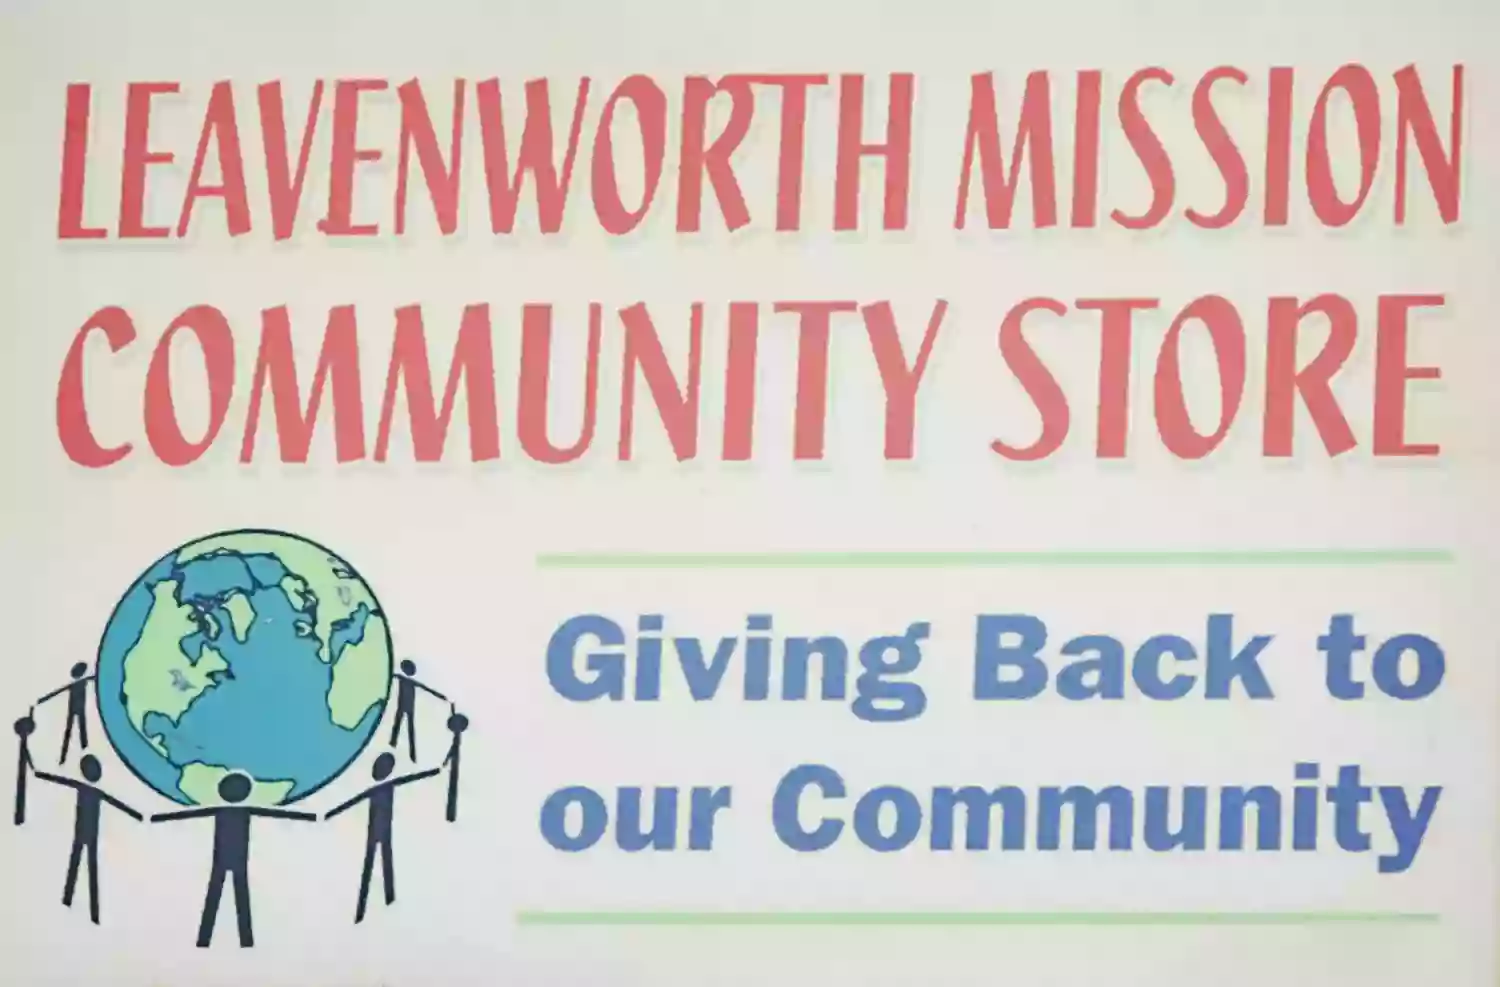 Leavenworth Mission Community Store